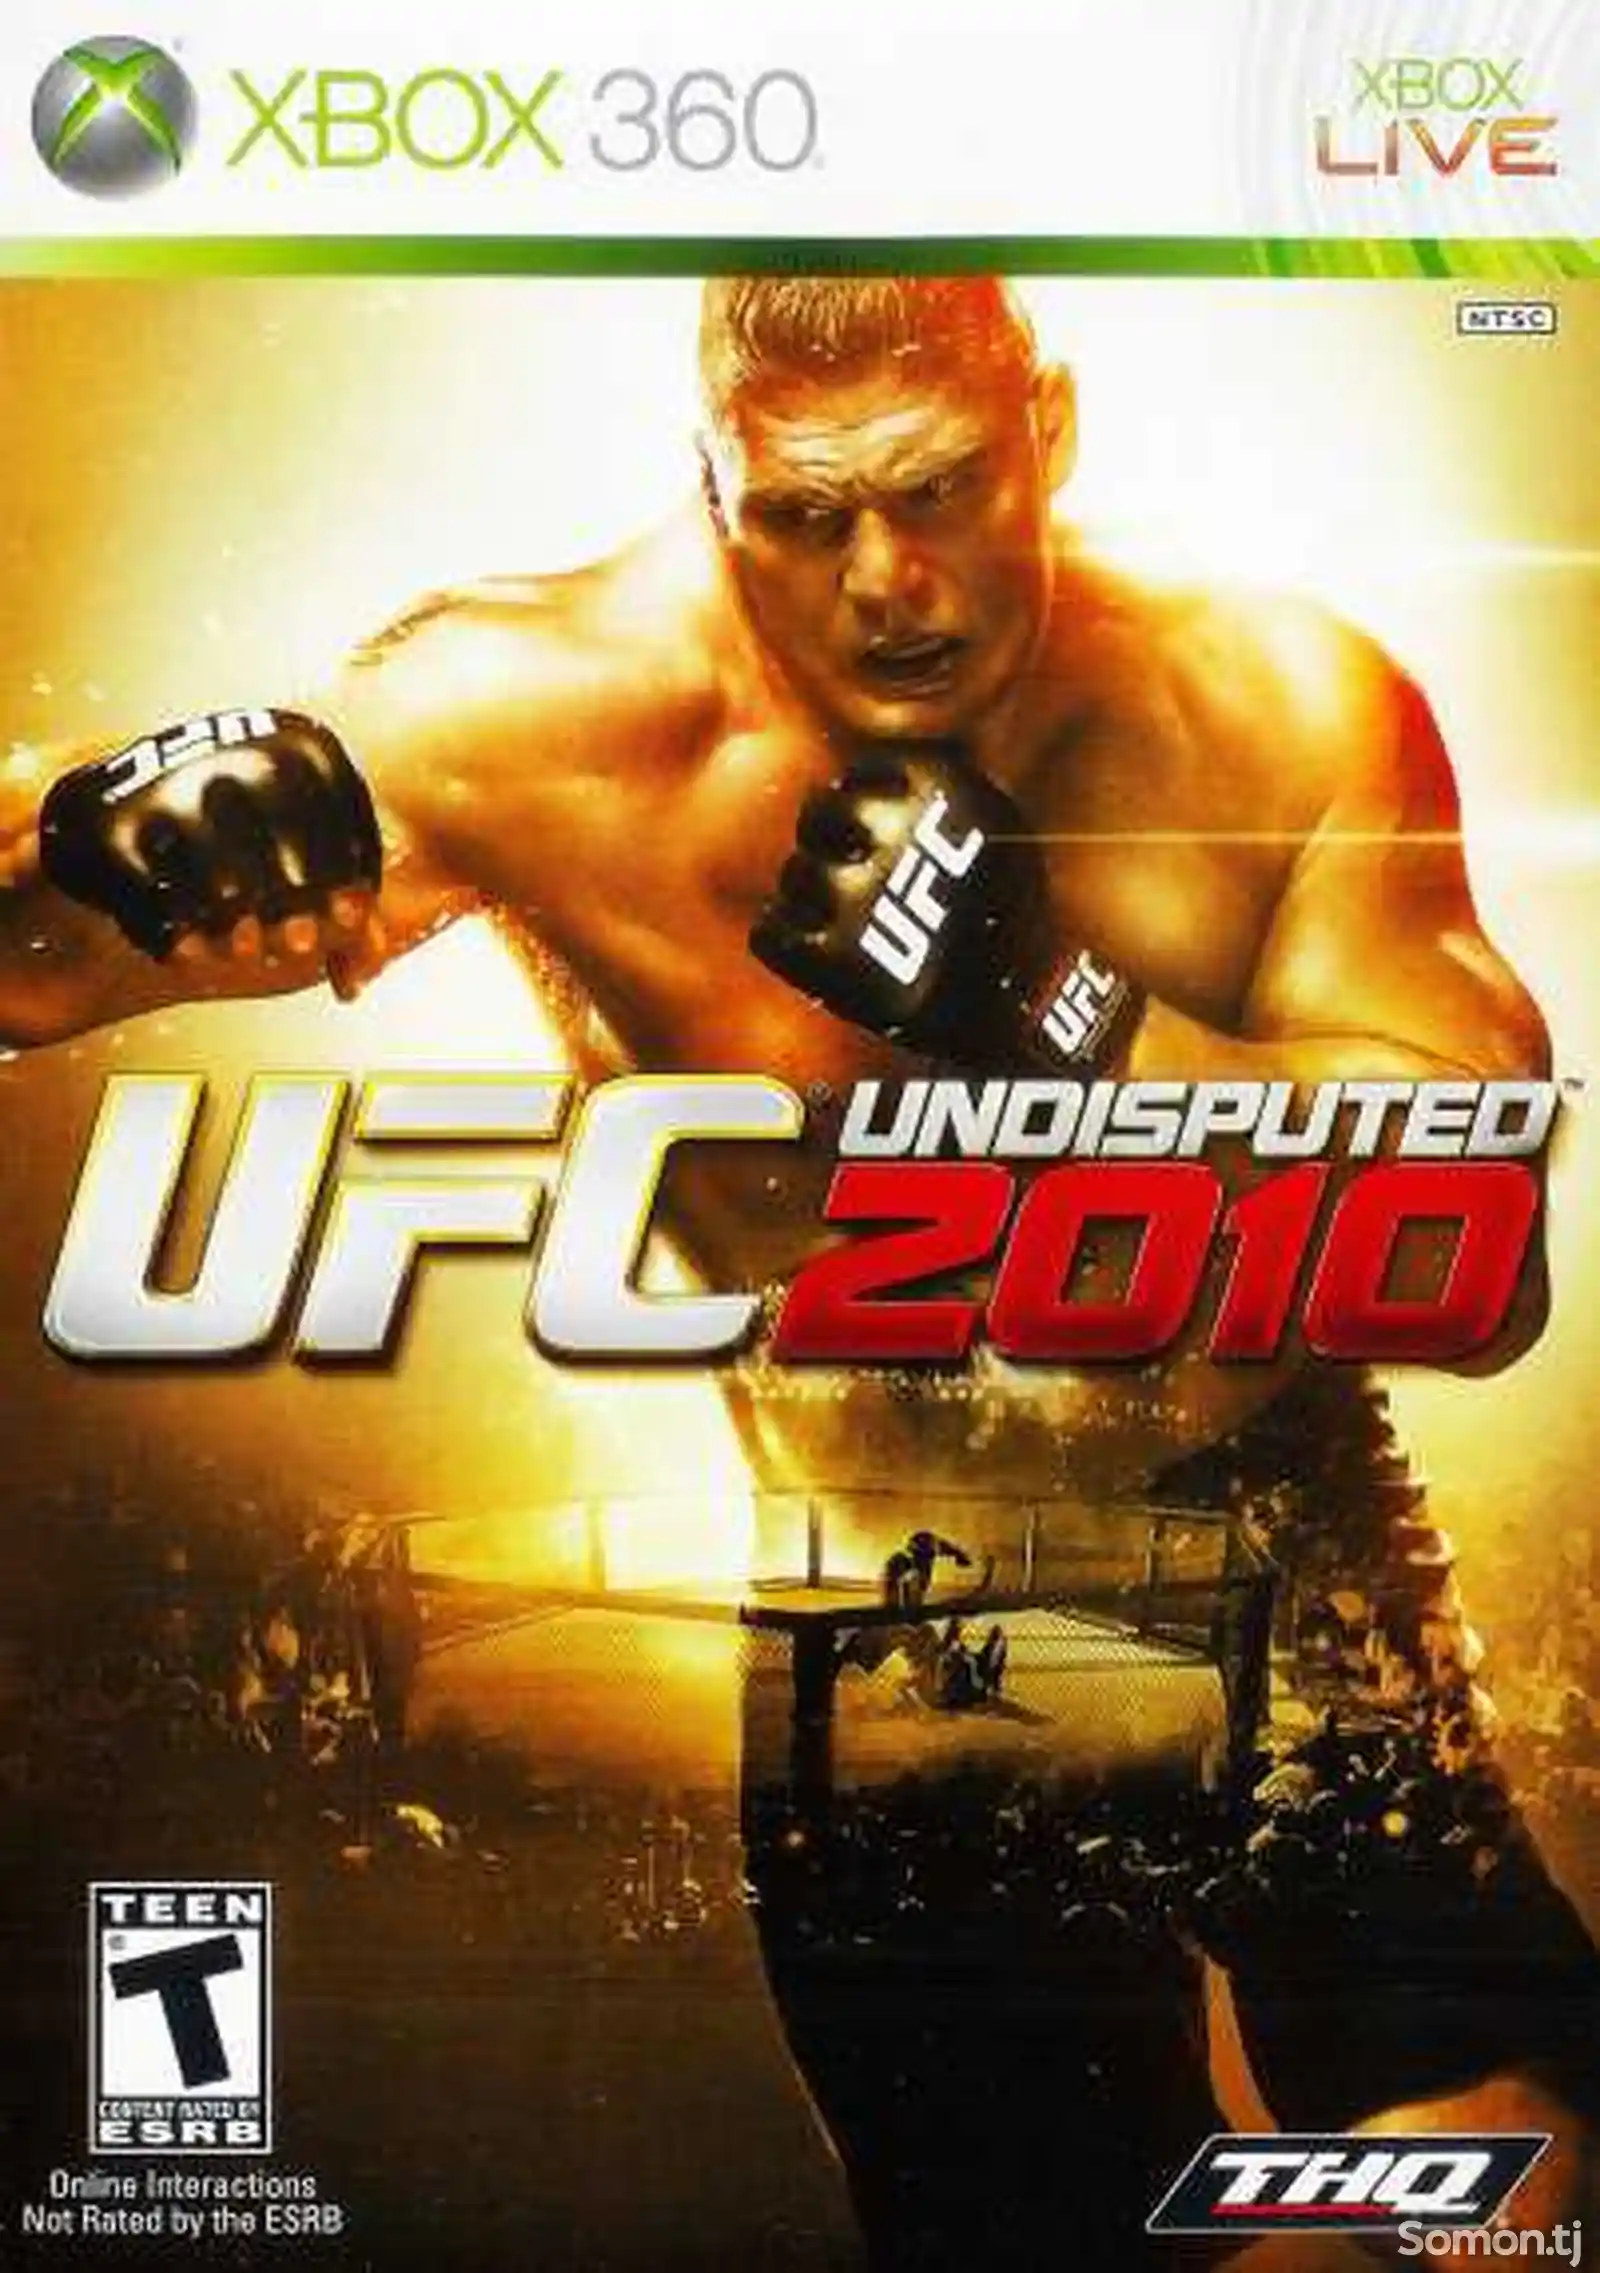 Игра Ufc undisputed 2010 для прошитых Xbox 360